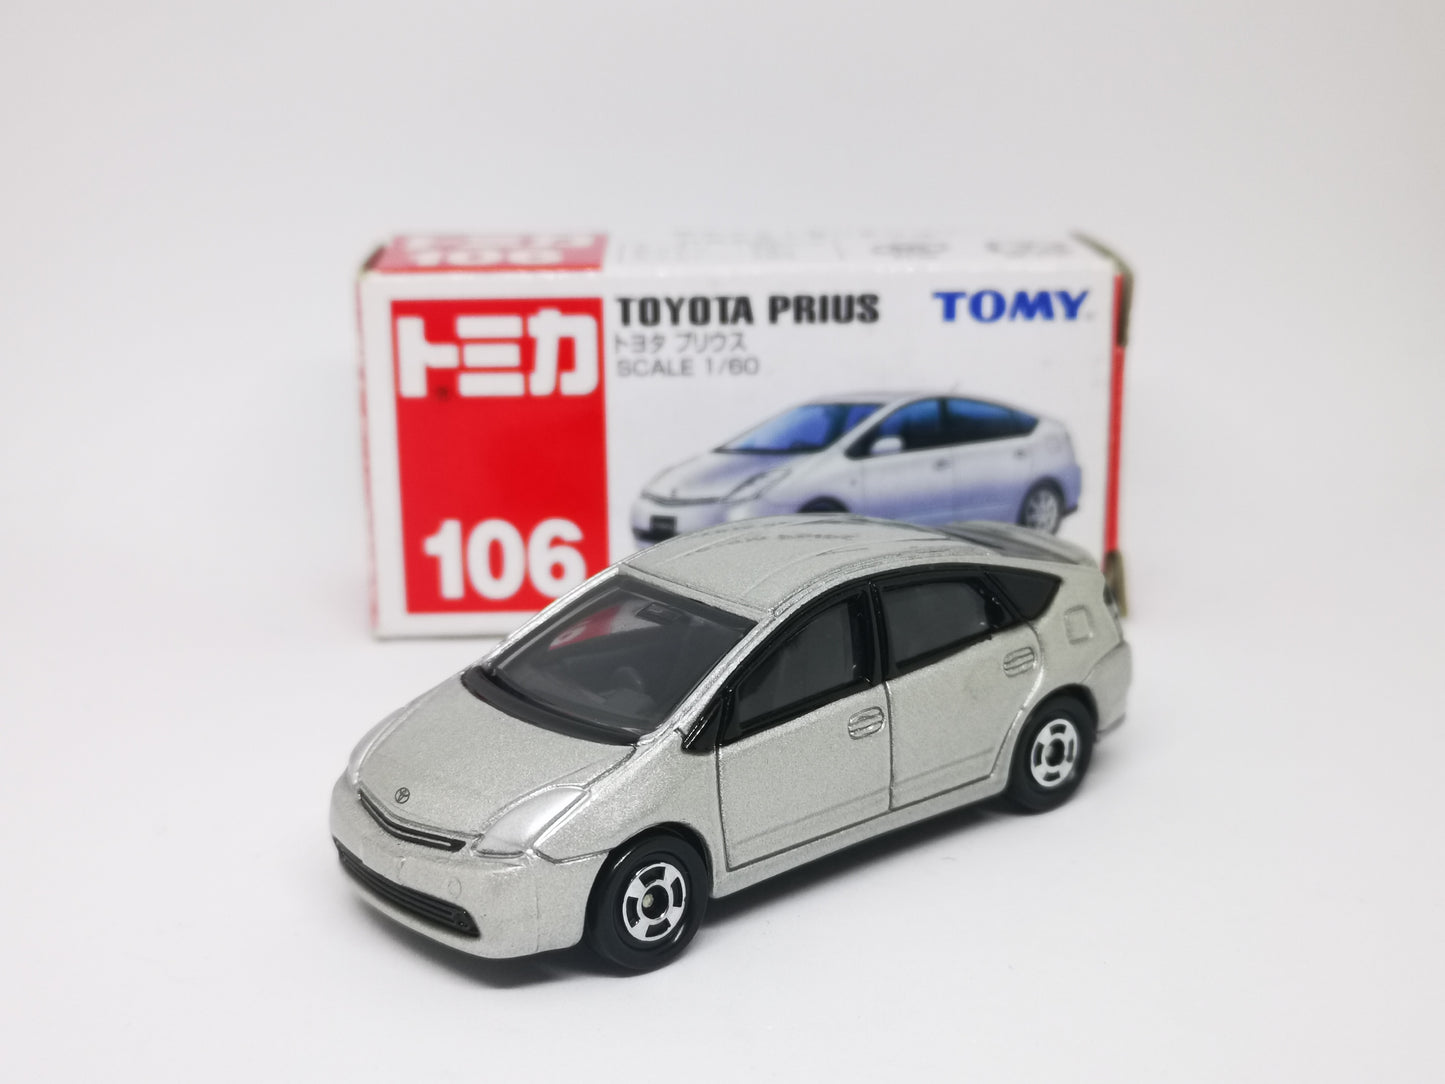 Tomica No.106 Toyota Prius 1:60 scale